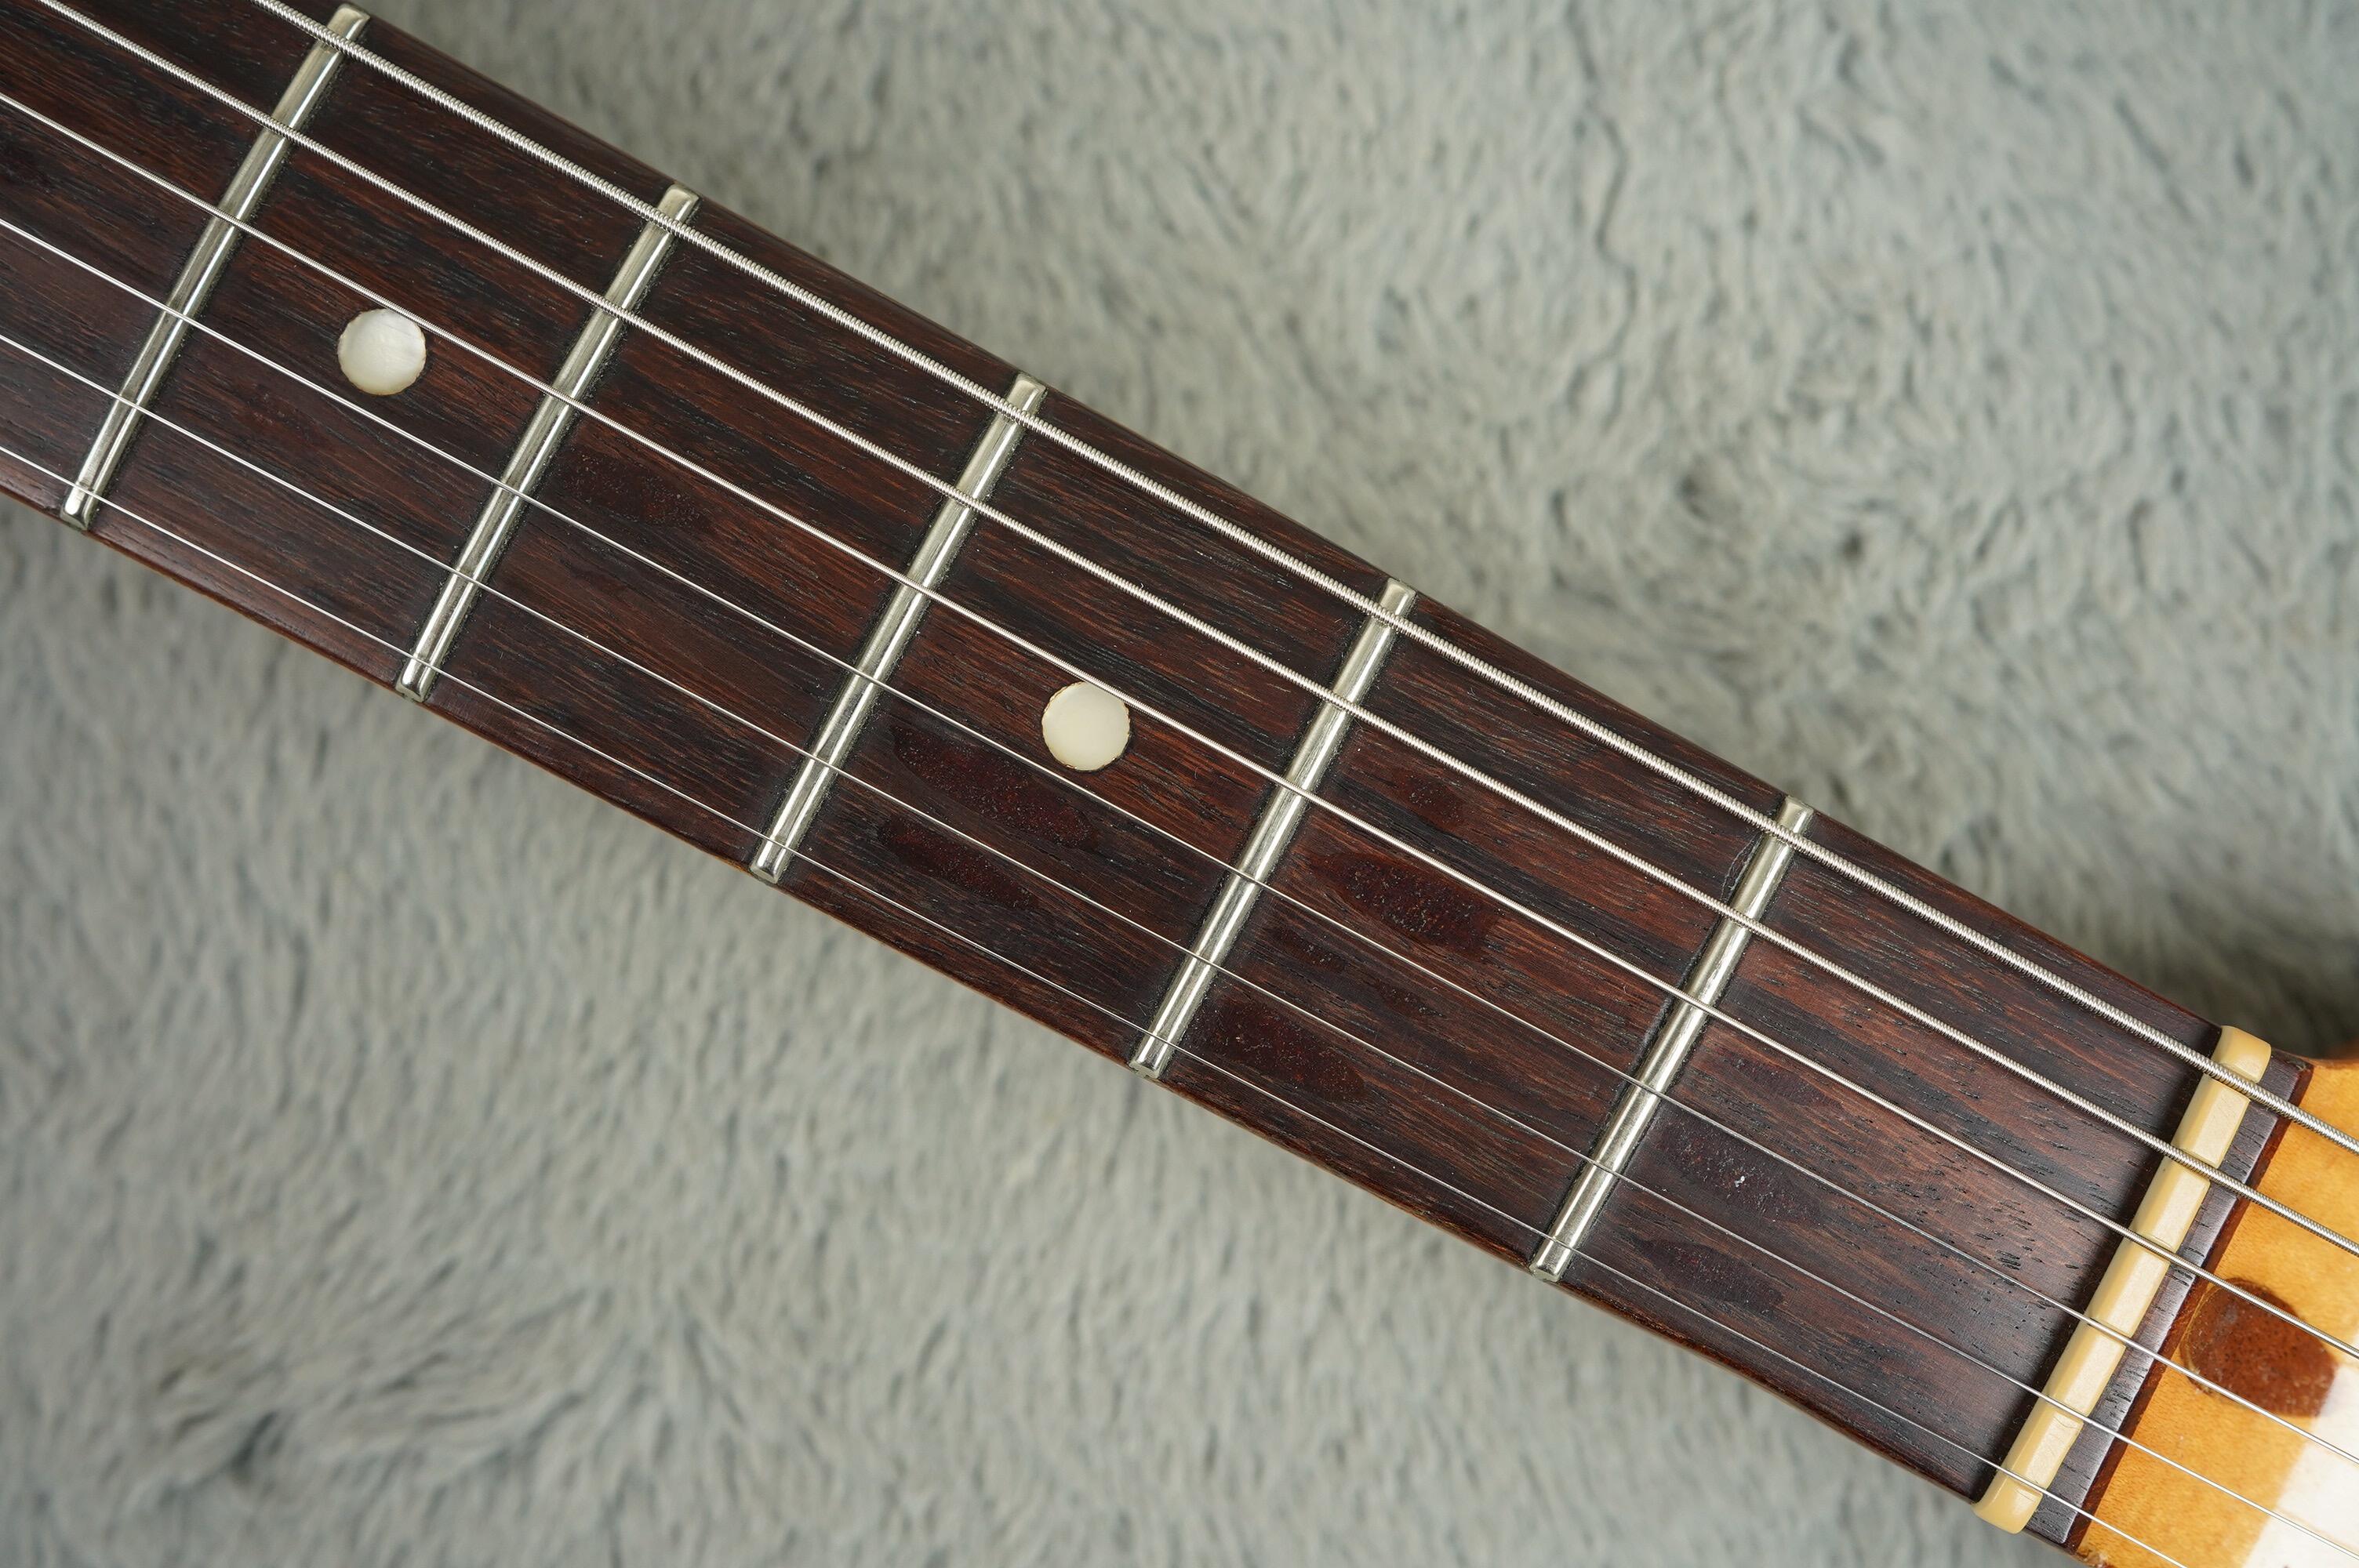 1969 Fender Telecaster refin natural